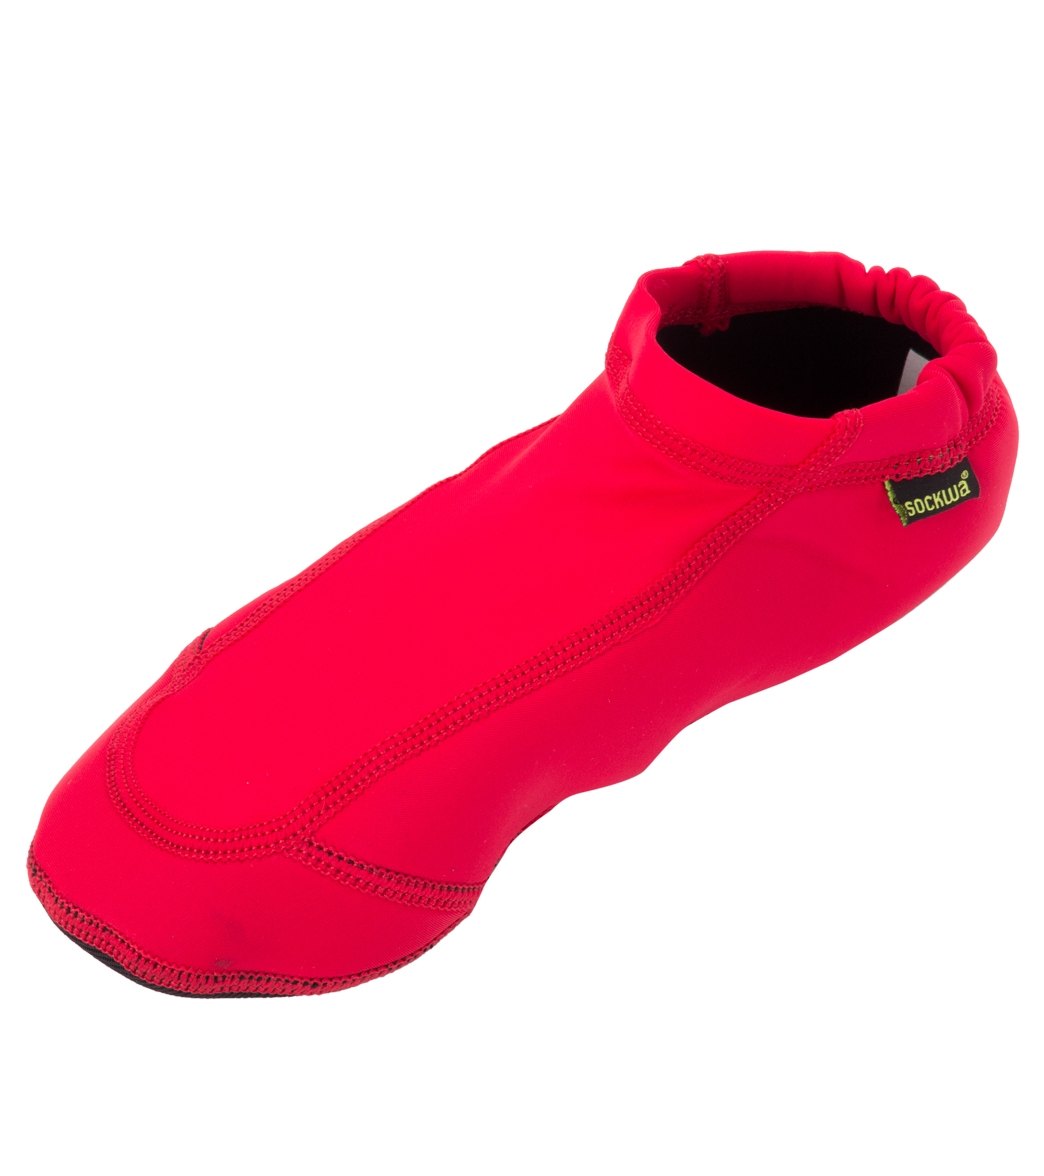 Sockwa Water Shoes Playa Lo Aqua Socks - Red M10/W11 Neoprene/Nylon - Swimoutlet.com